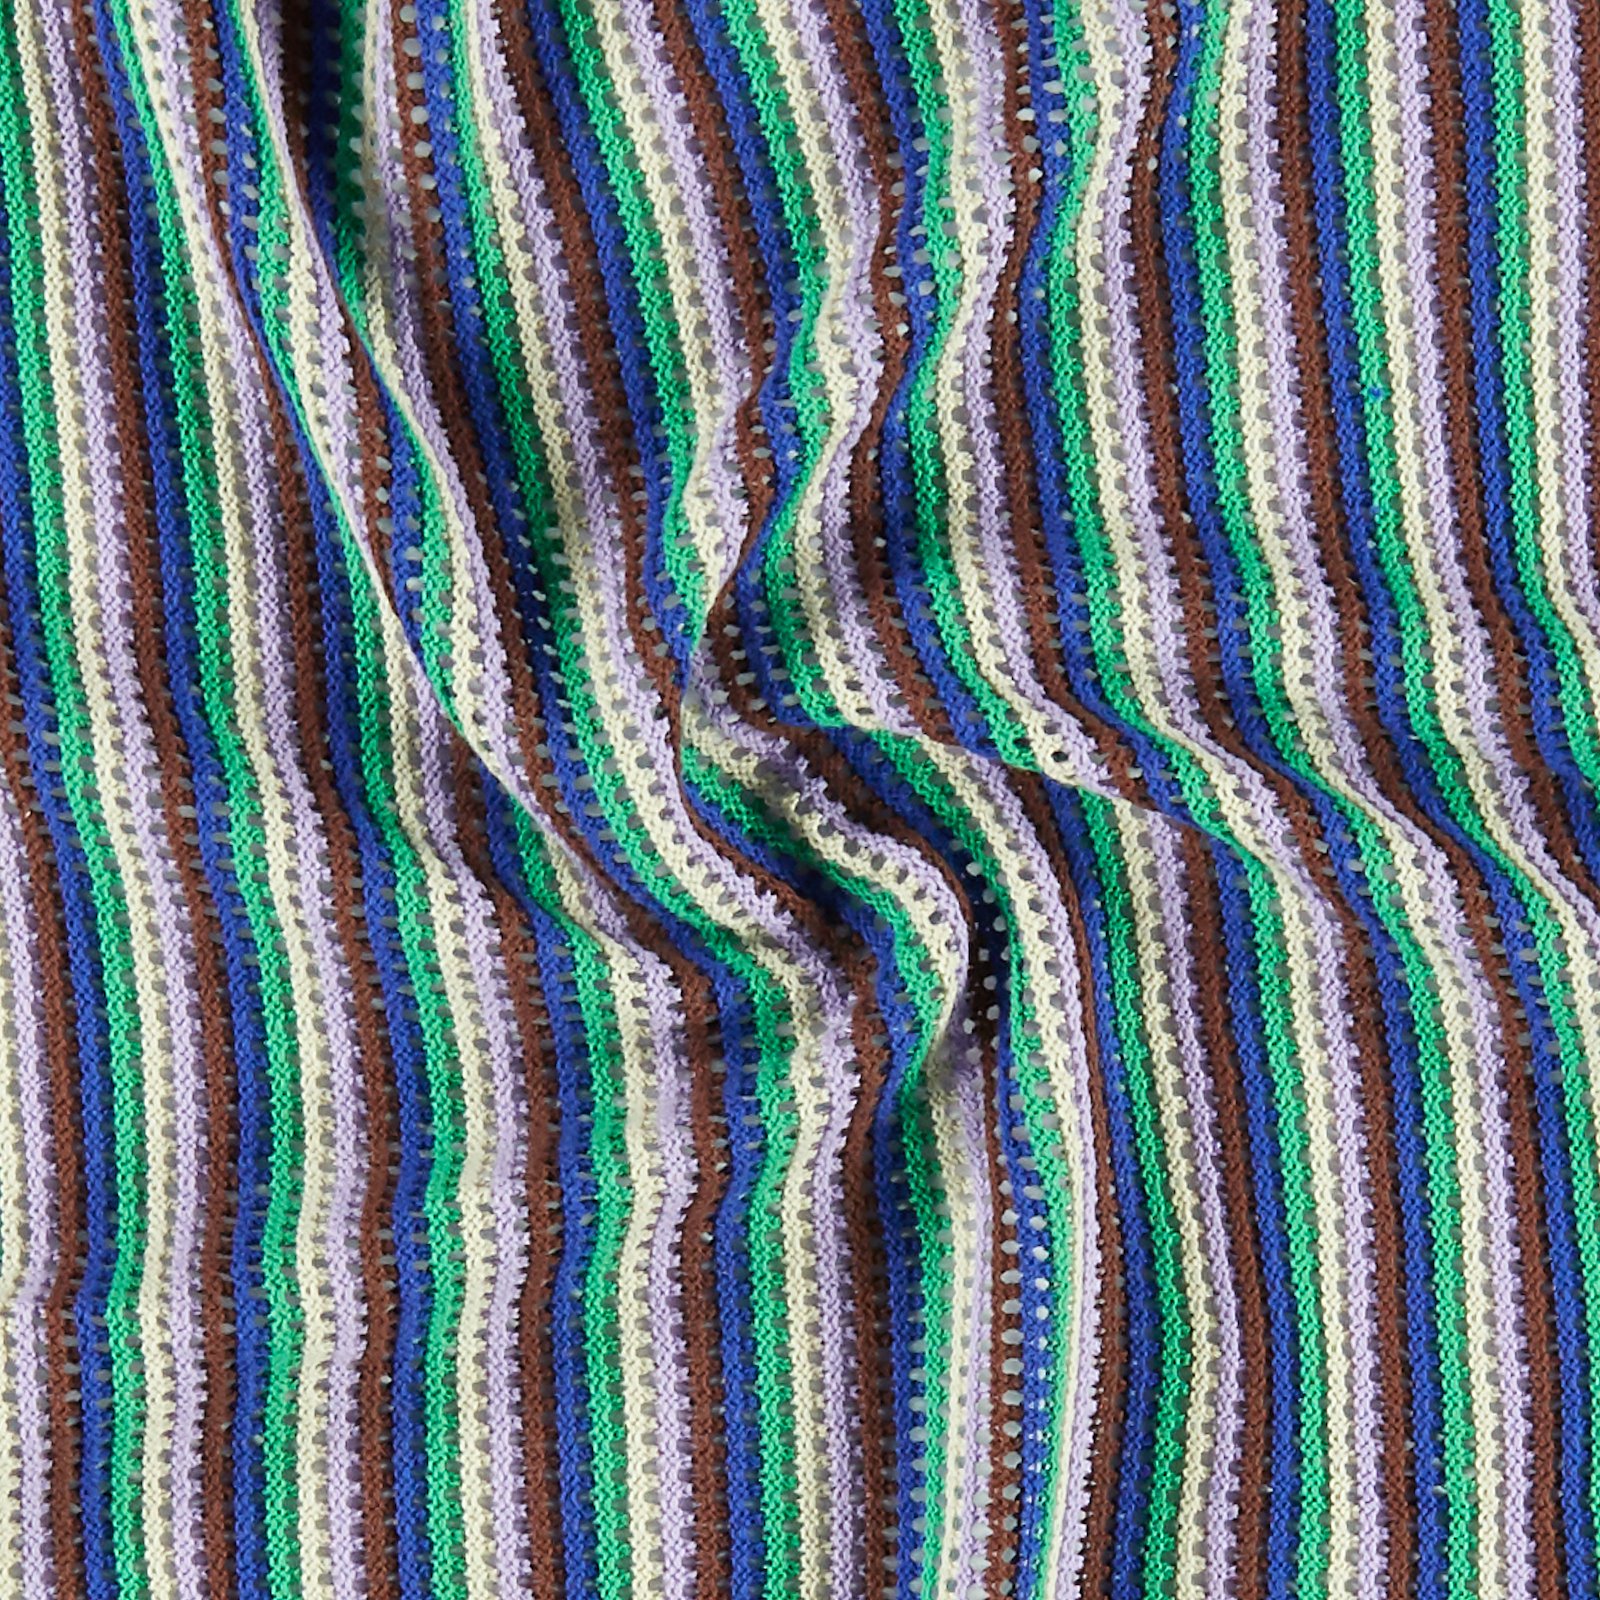 Crochet look w multicolored YD stripes 240502_pack